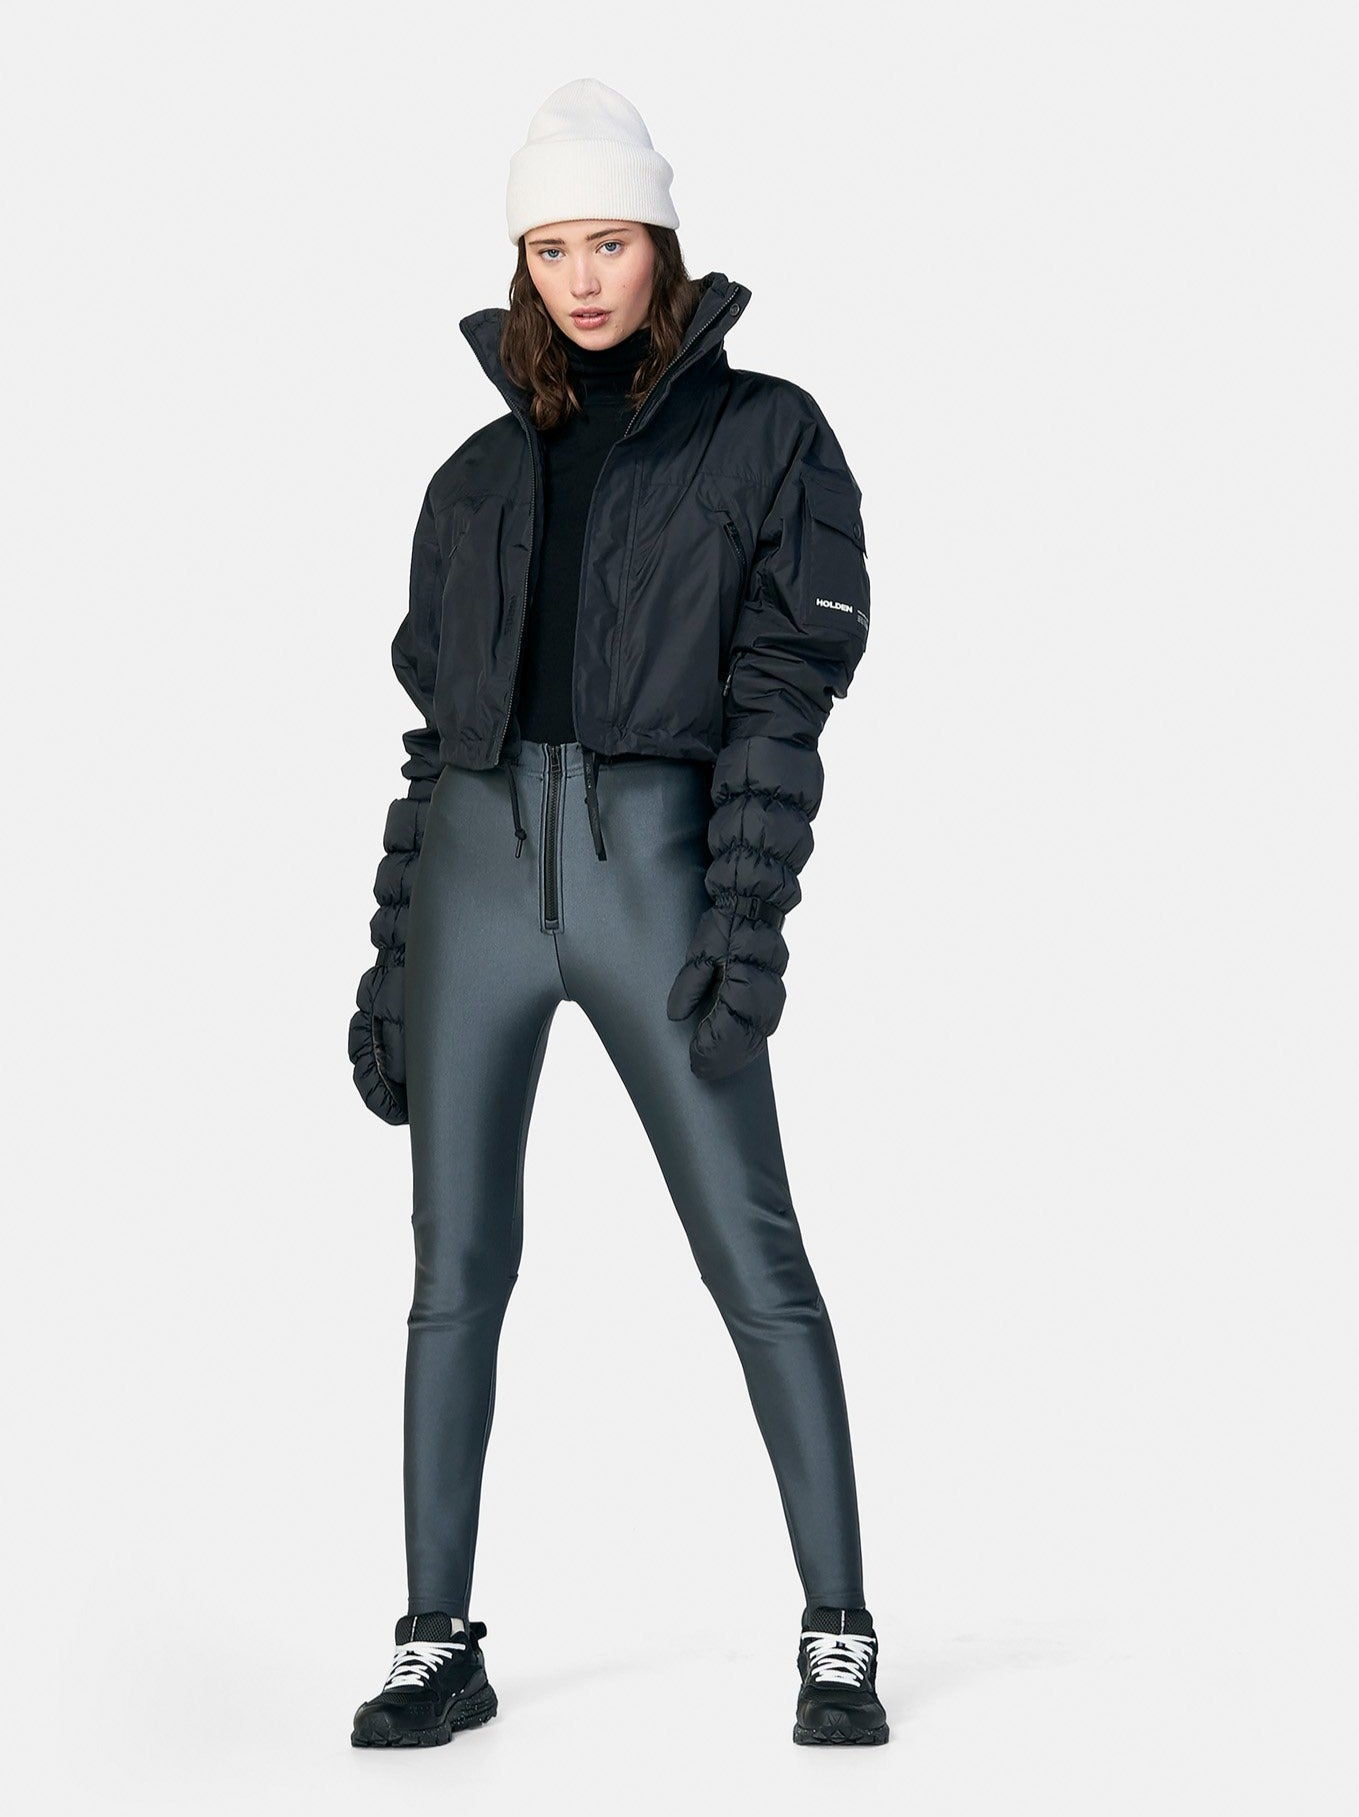 Woman Ski Suit - Black/Anthracite